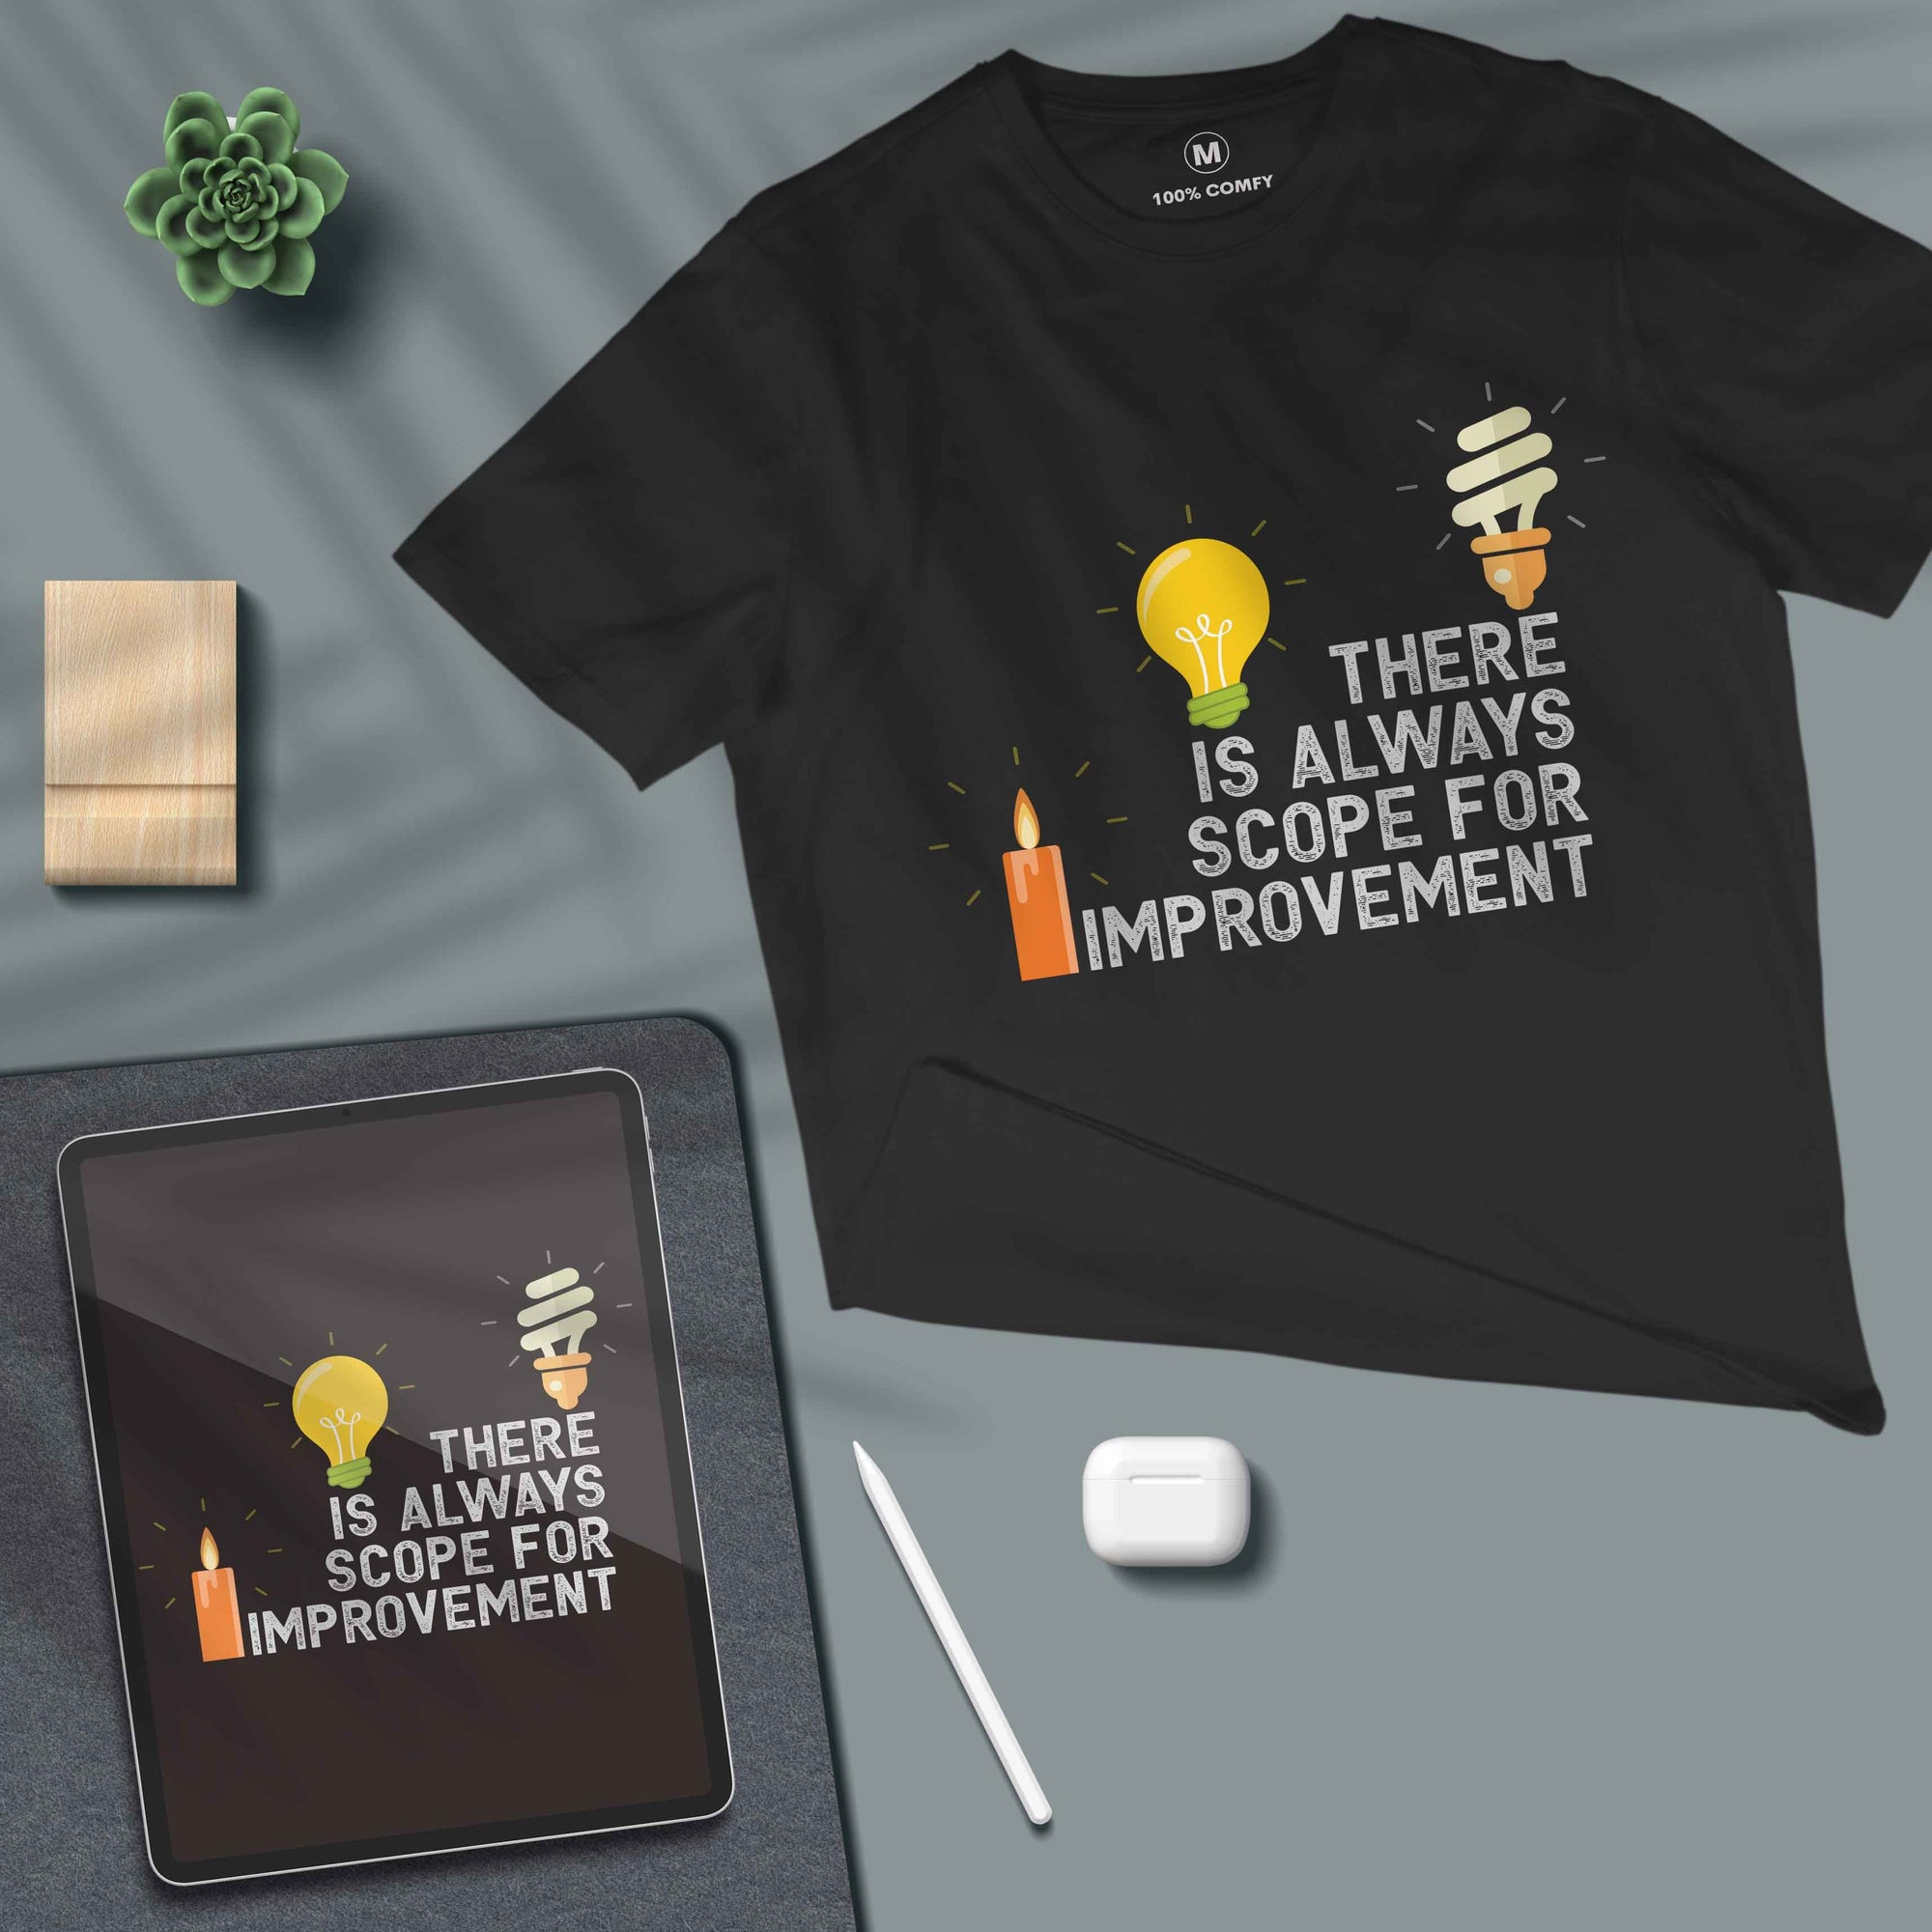 Improvement - Unisex T-shirt